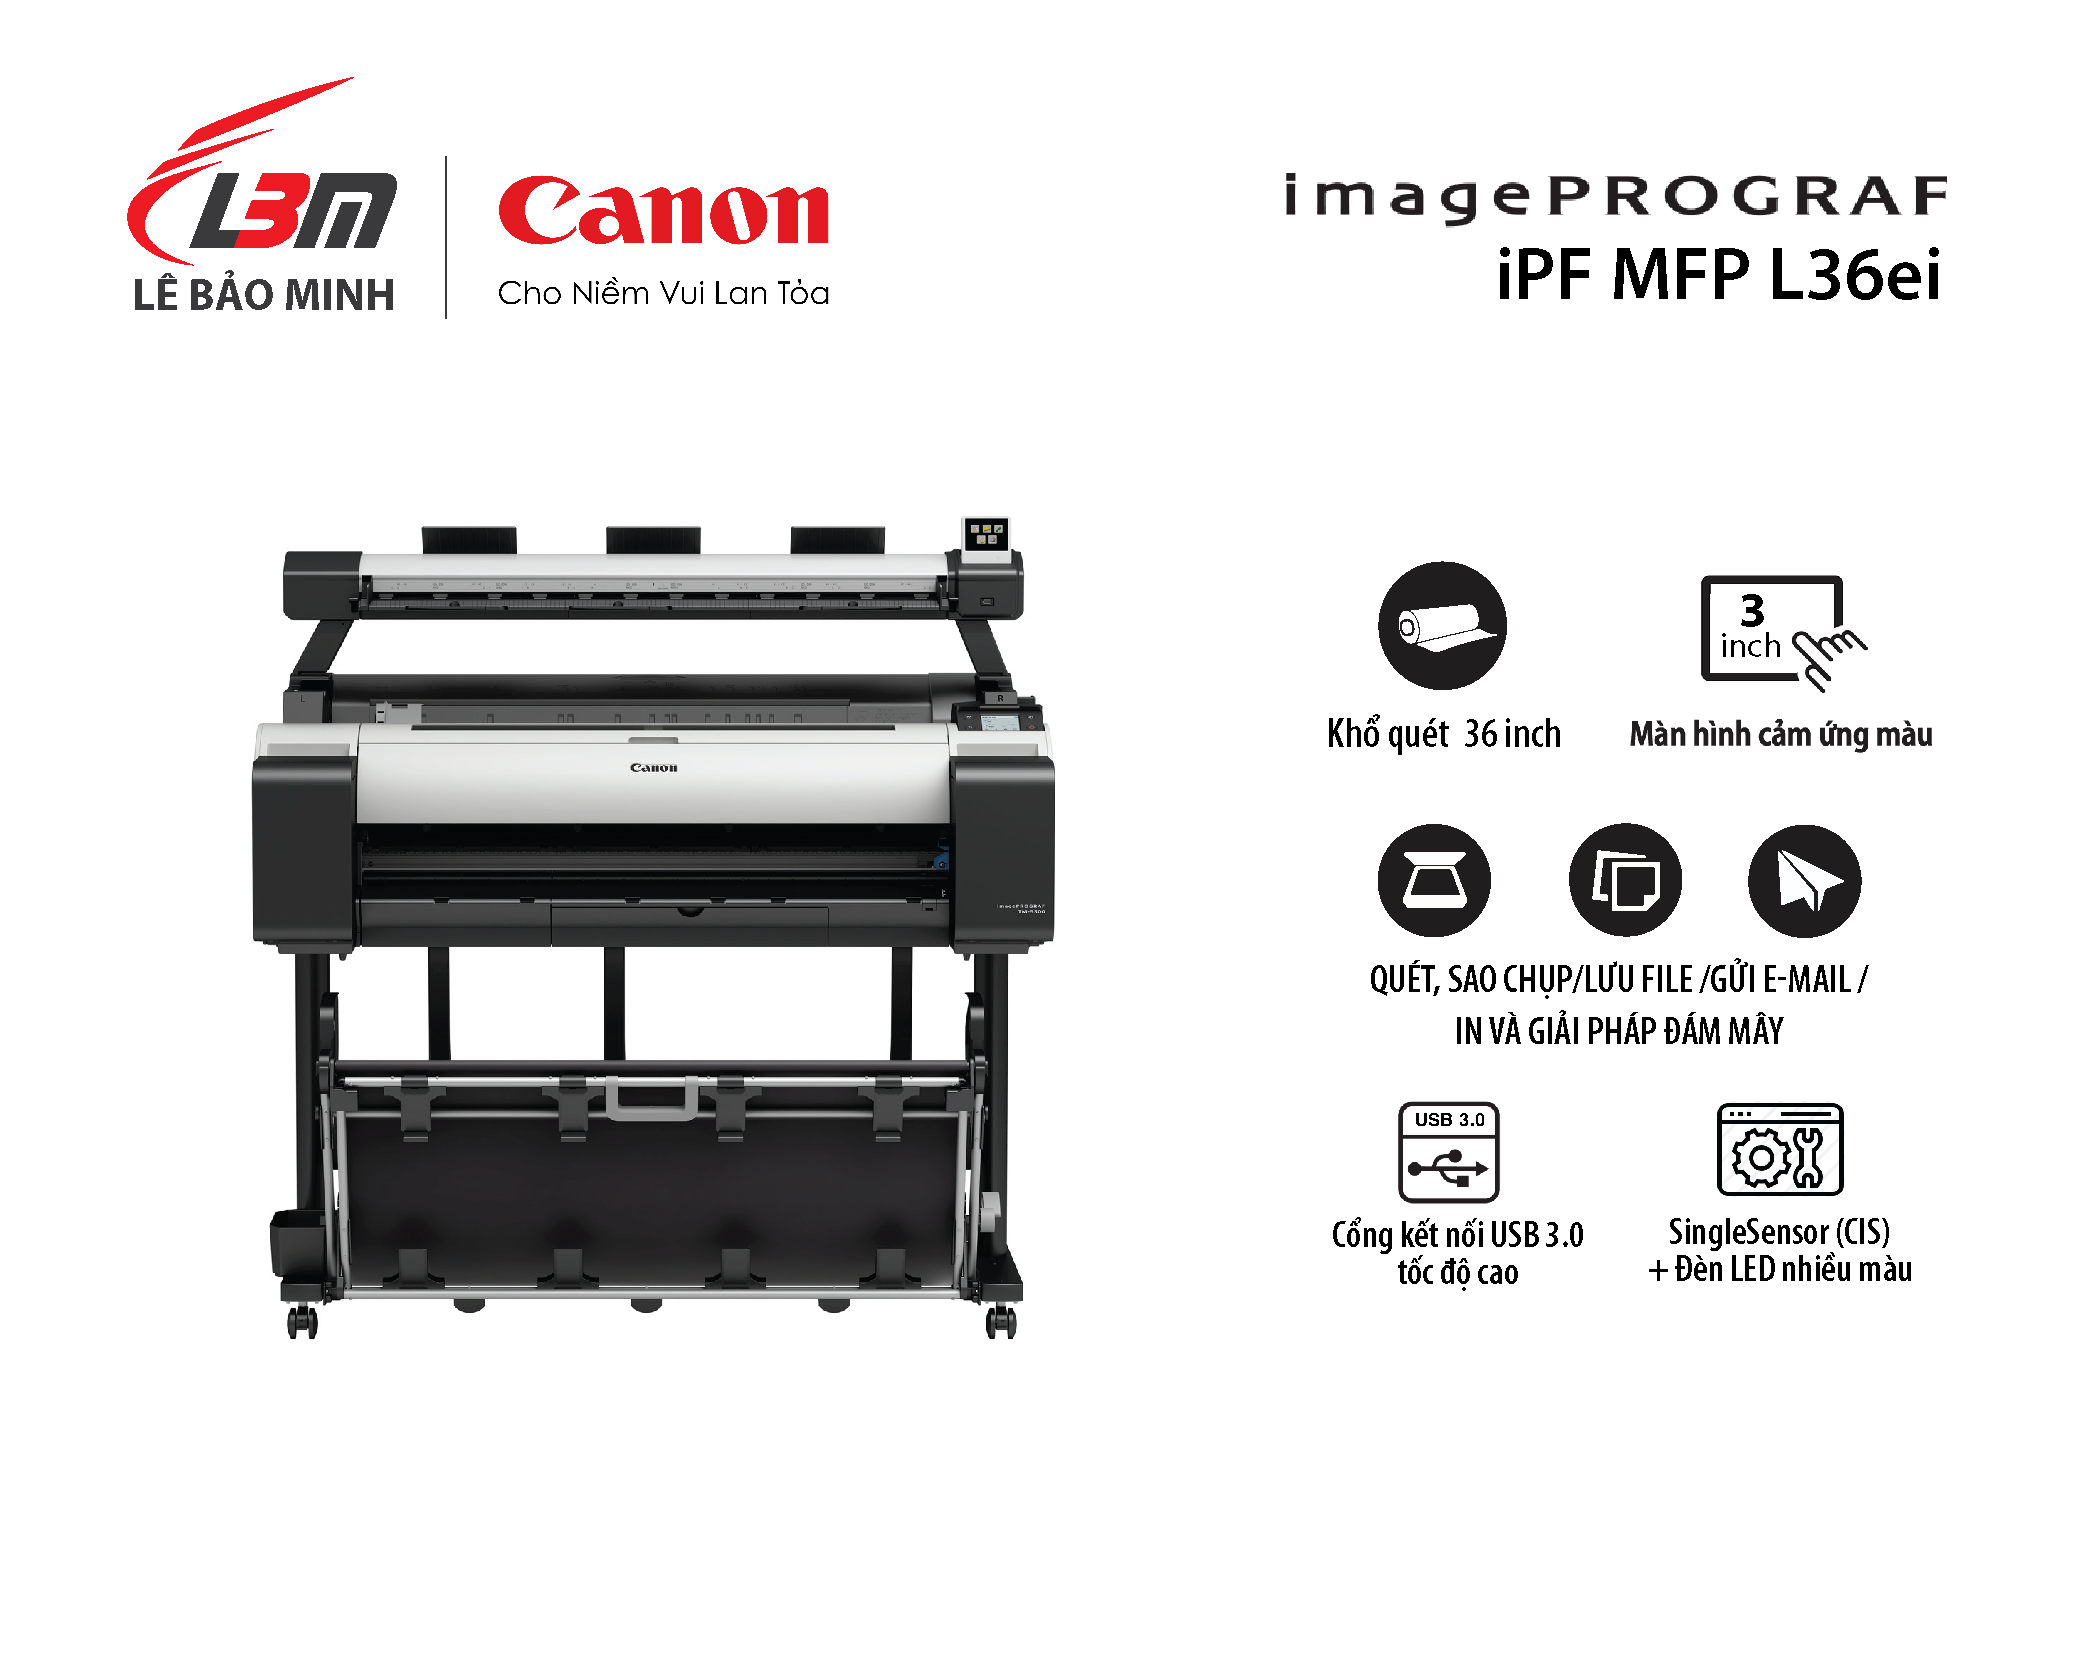 imagePROGRAF iPF MFP L36ei (dùng cho máy TM-5300 / TM-5305)